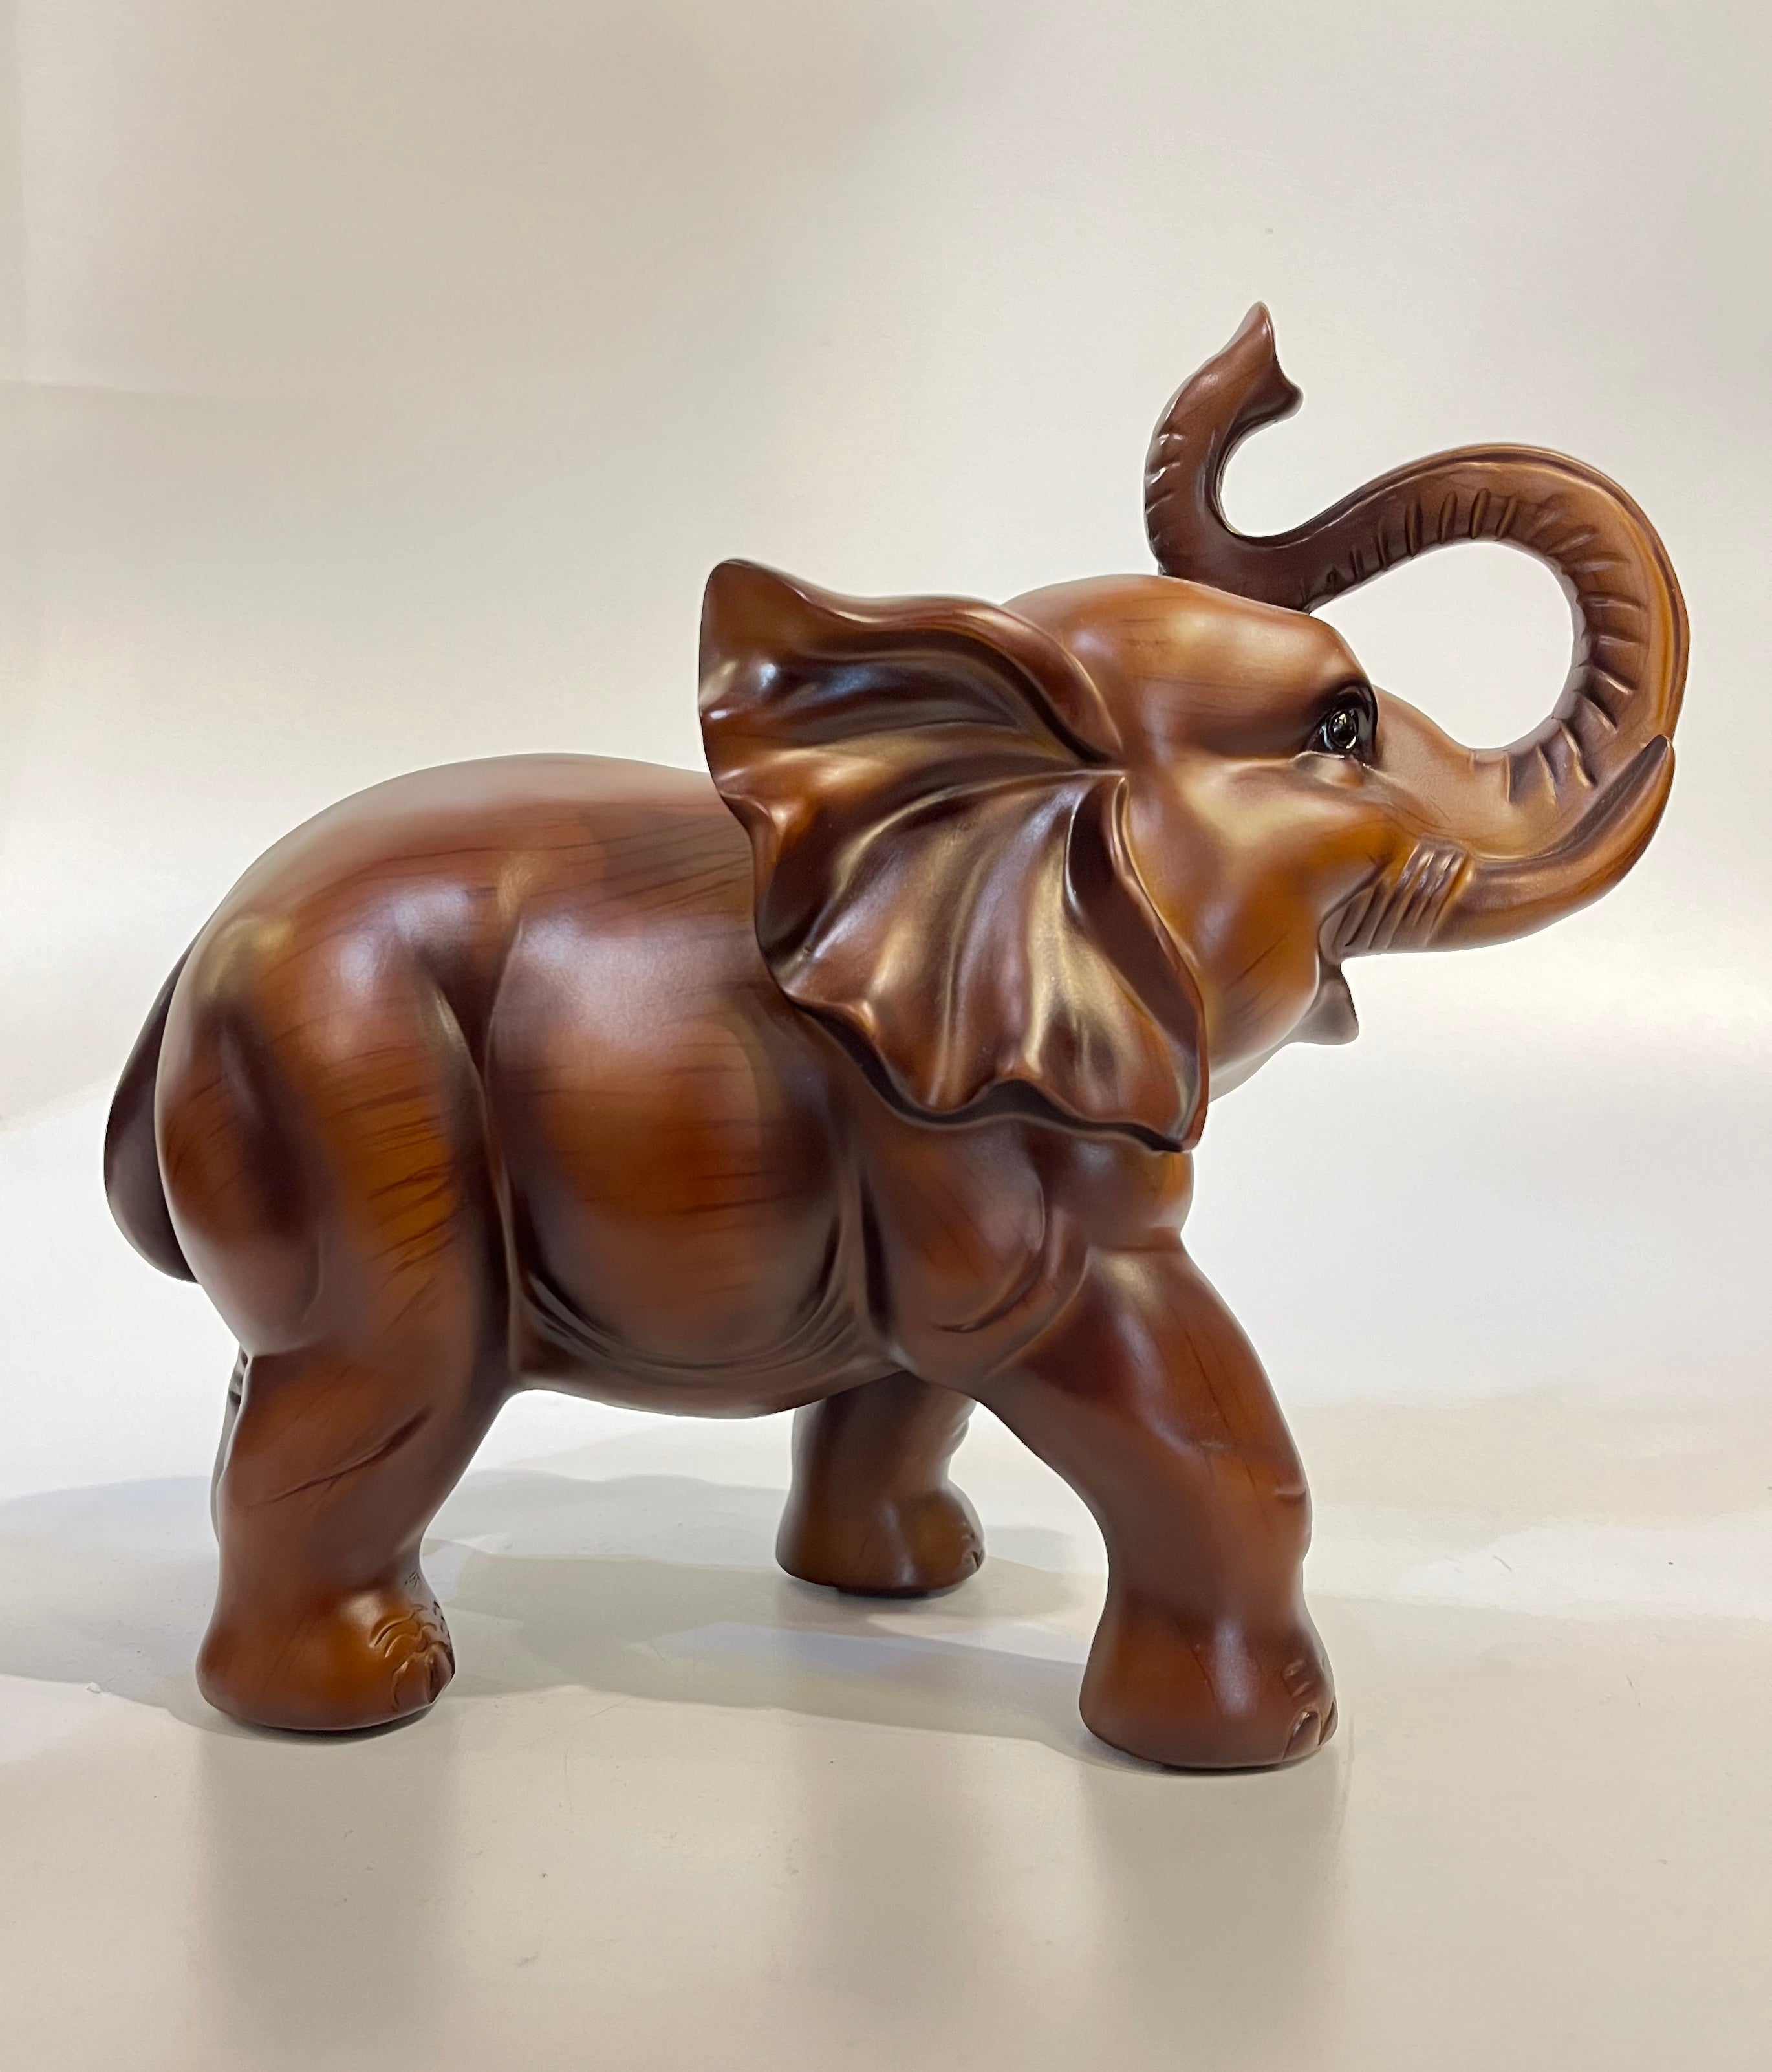 Resin Elephant Statue